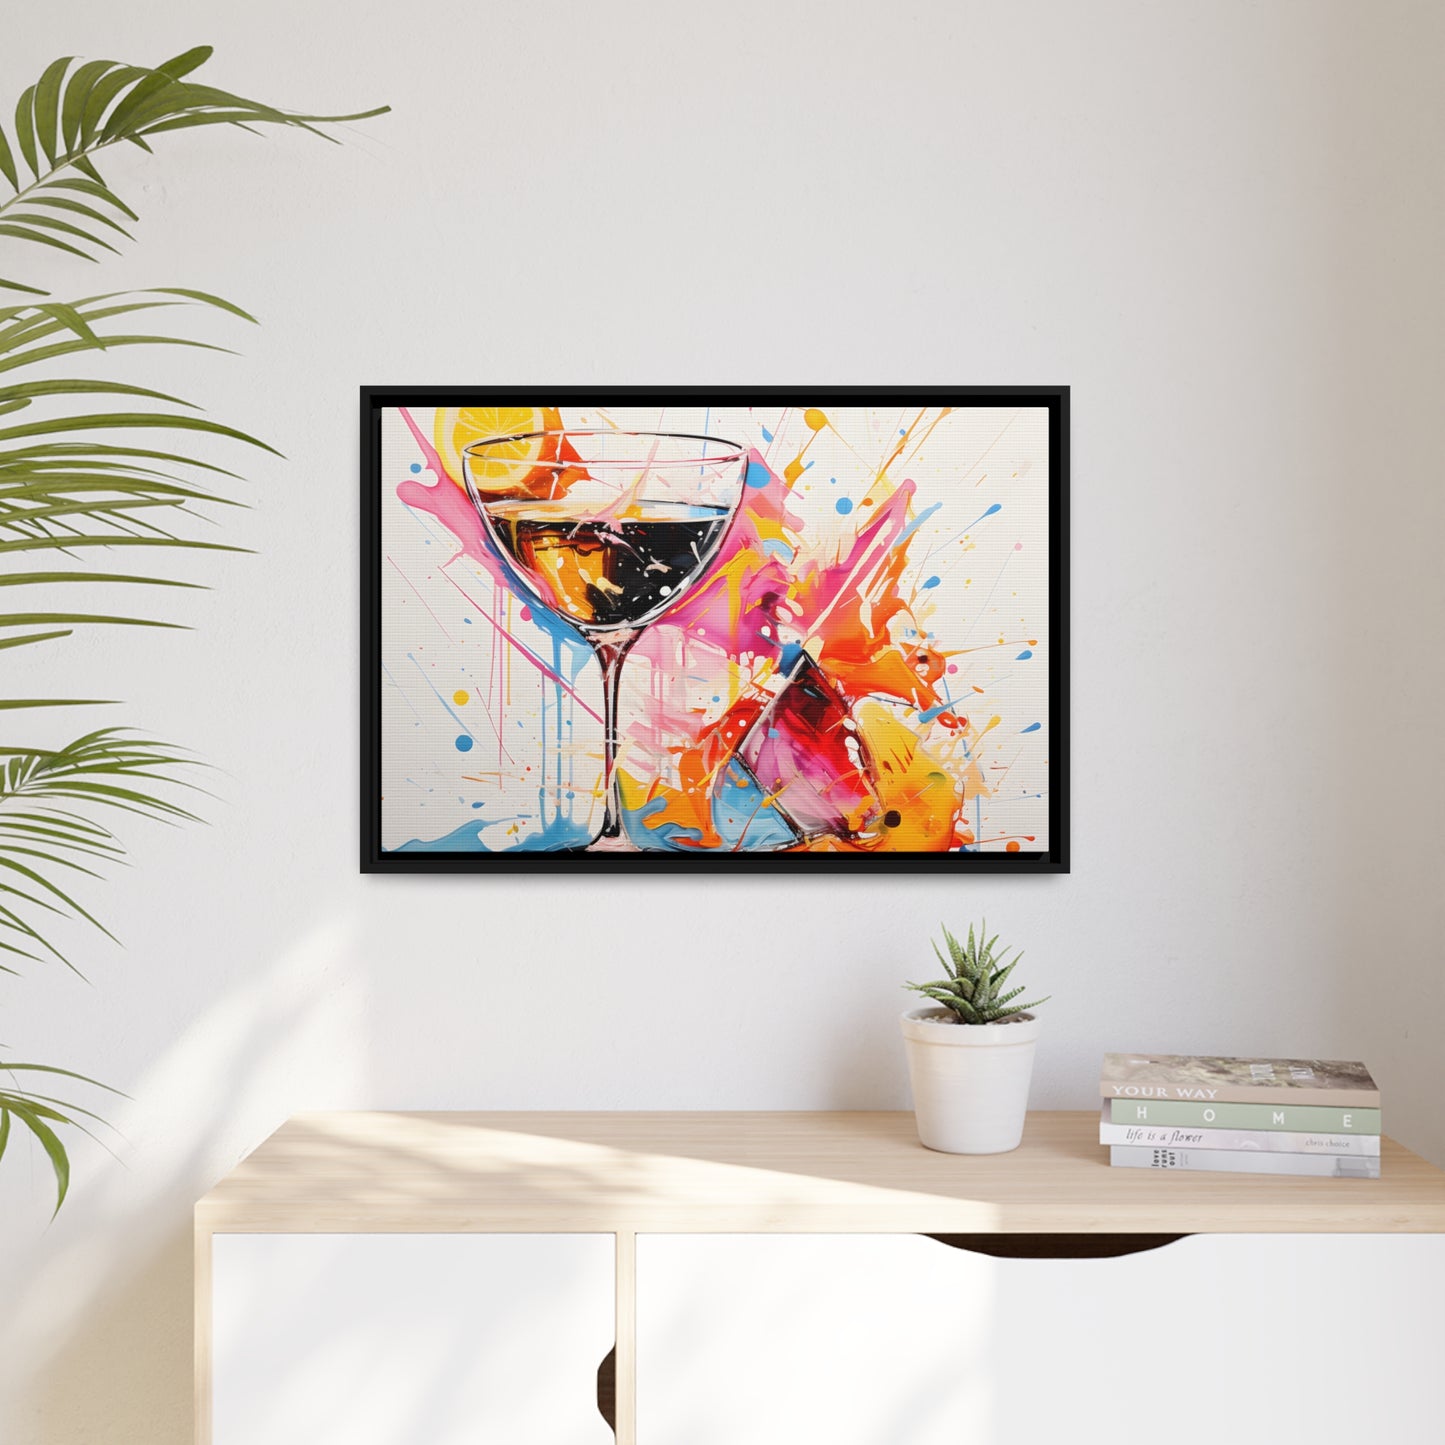 Framed Canvas Artwork Bright Vibrant Splashes Of Color Over A White Background Surrounding A Glass Of Liqour Alcohol Lemon Slice Floating Frame Canvas Artwork